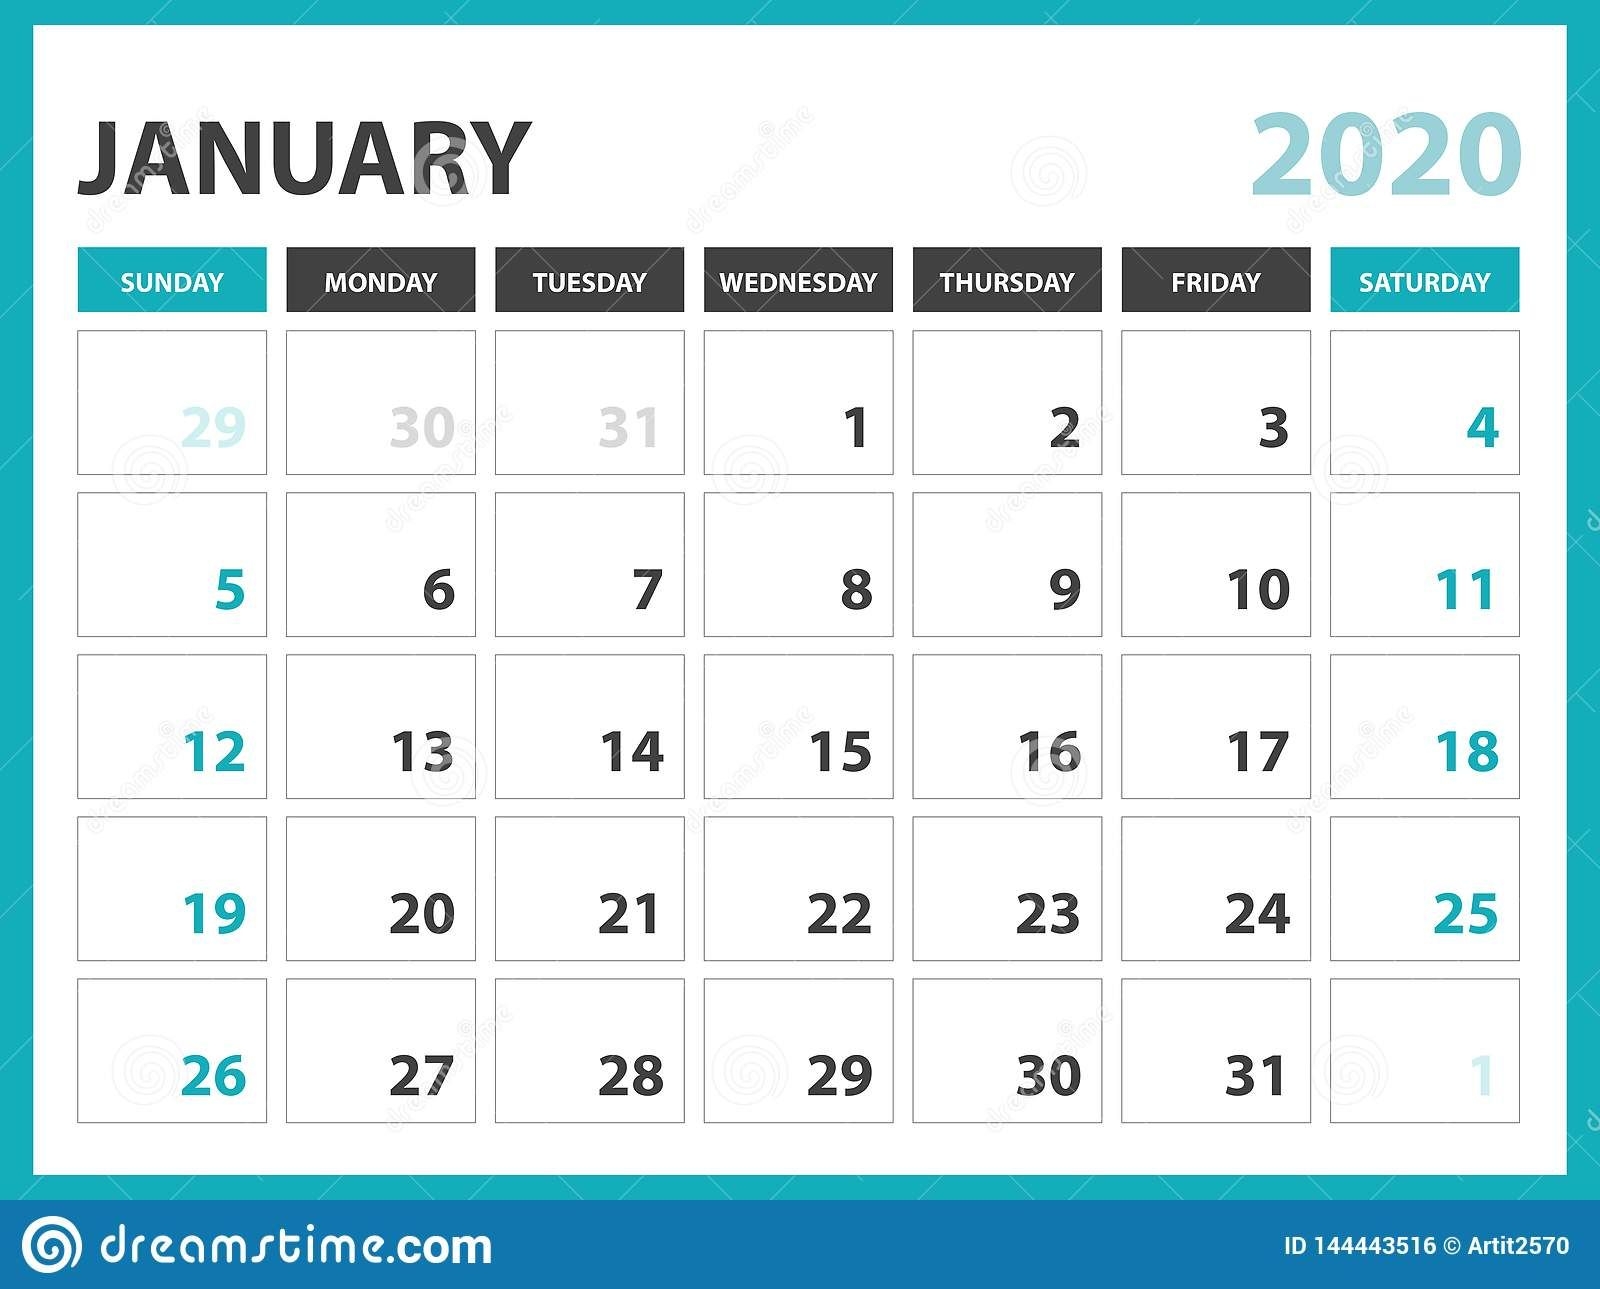 desk calendar layout size 8 x 6 inch, january 2020 calendar